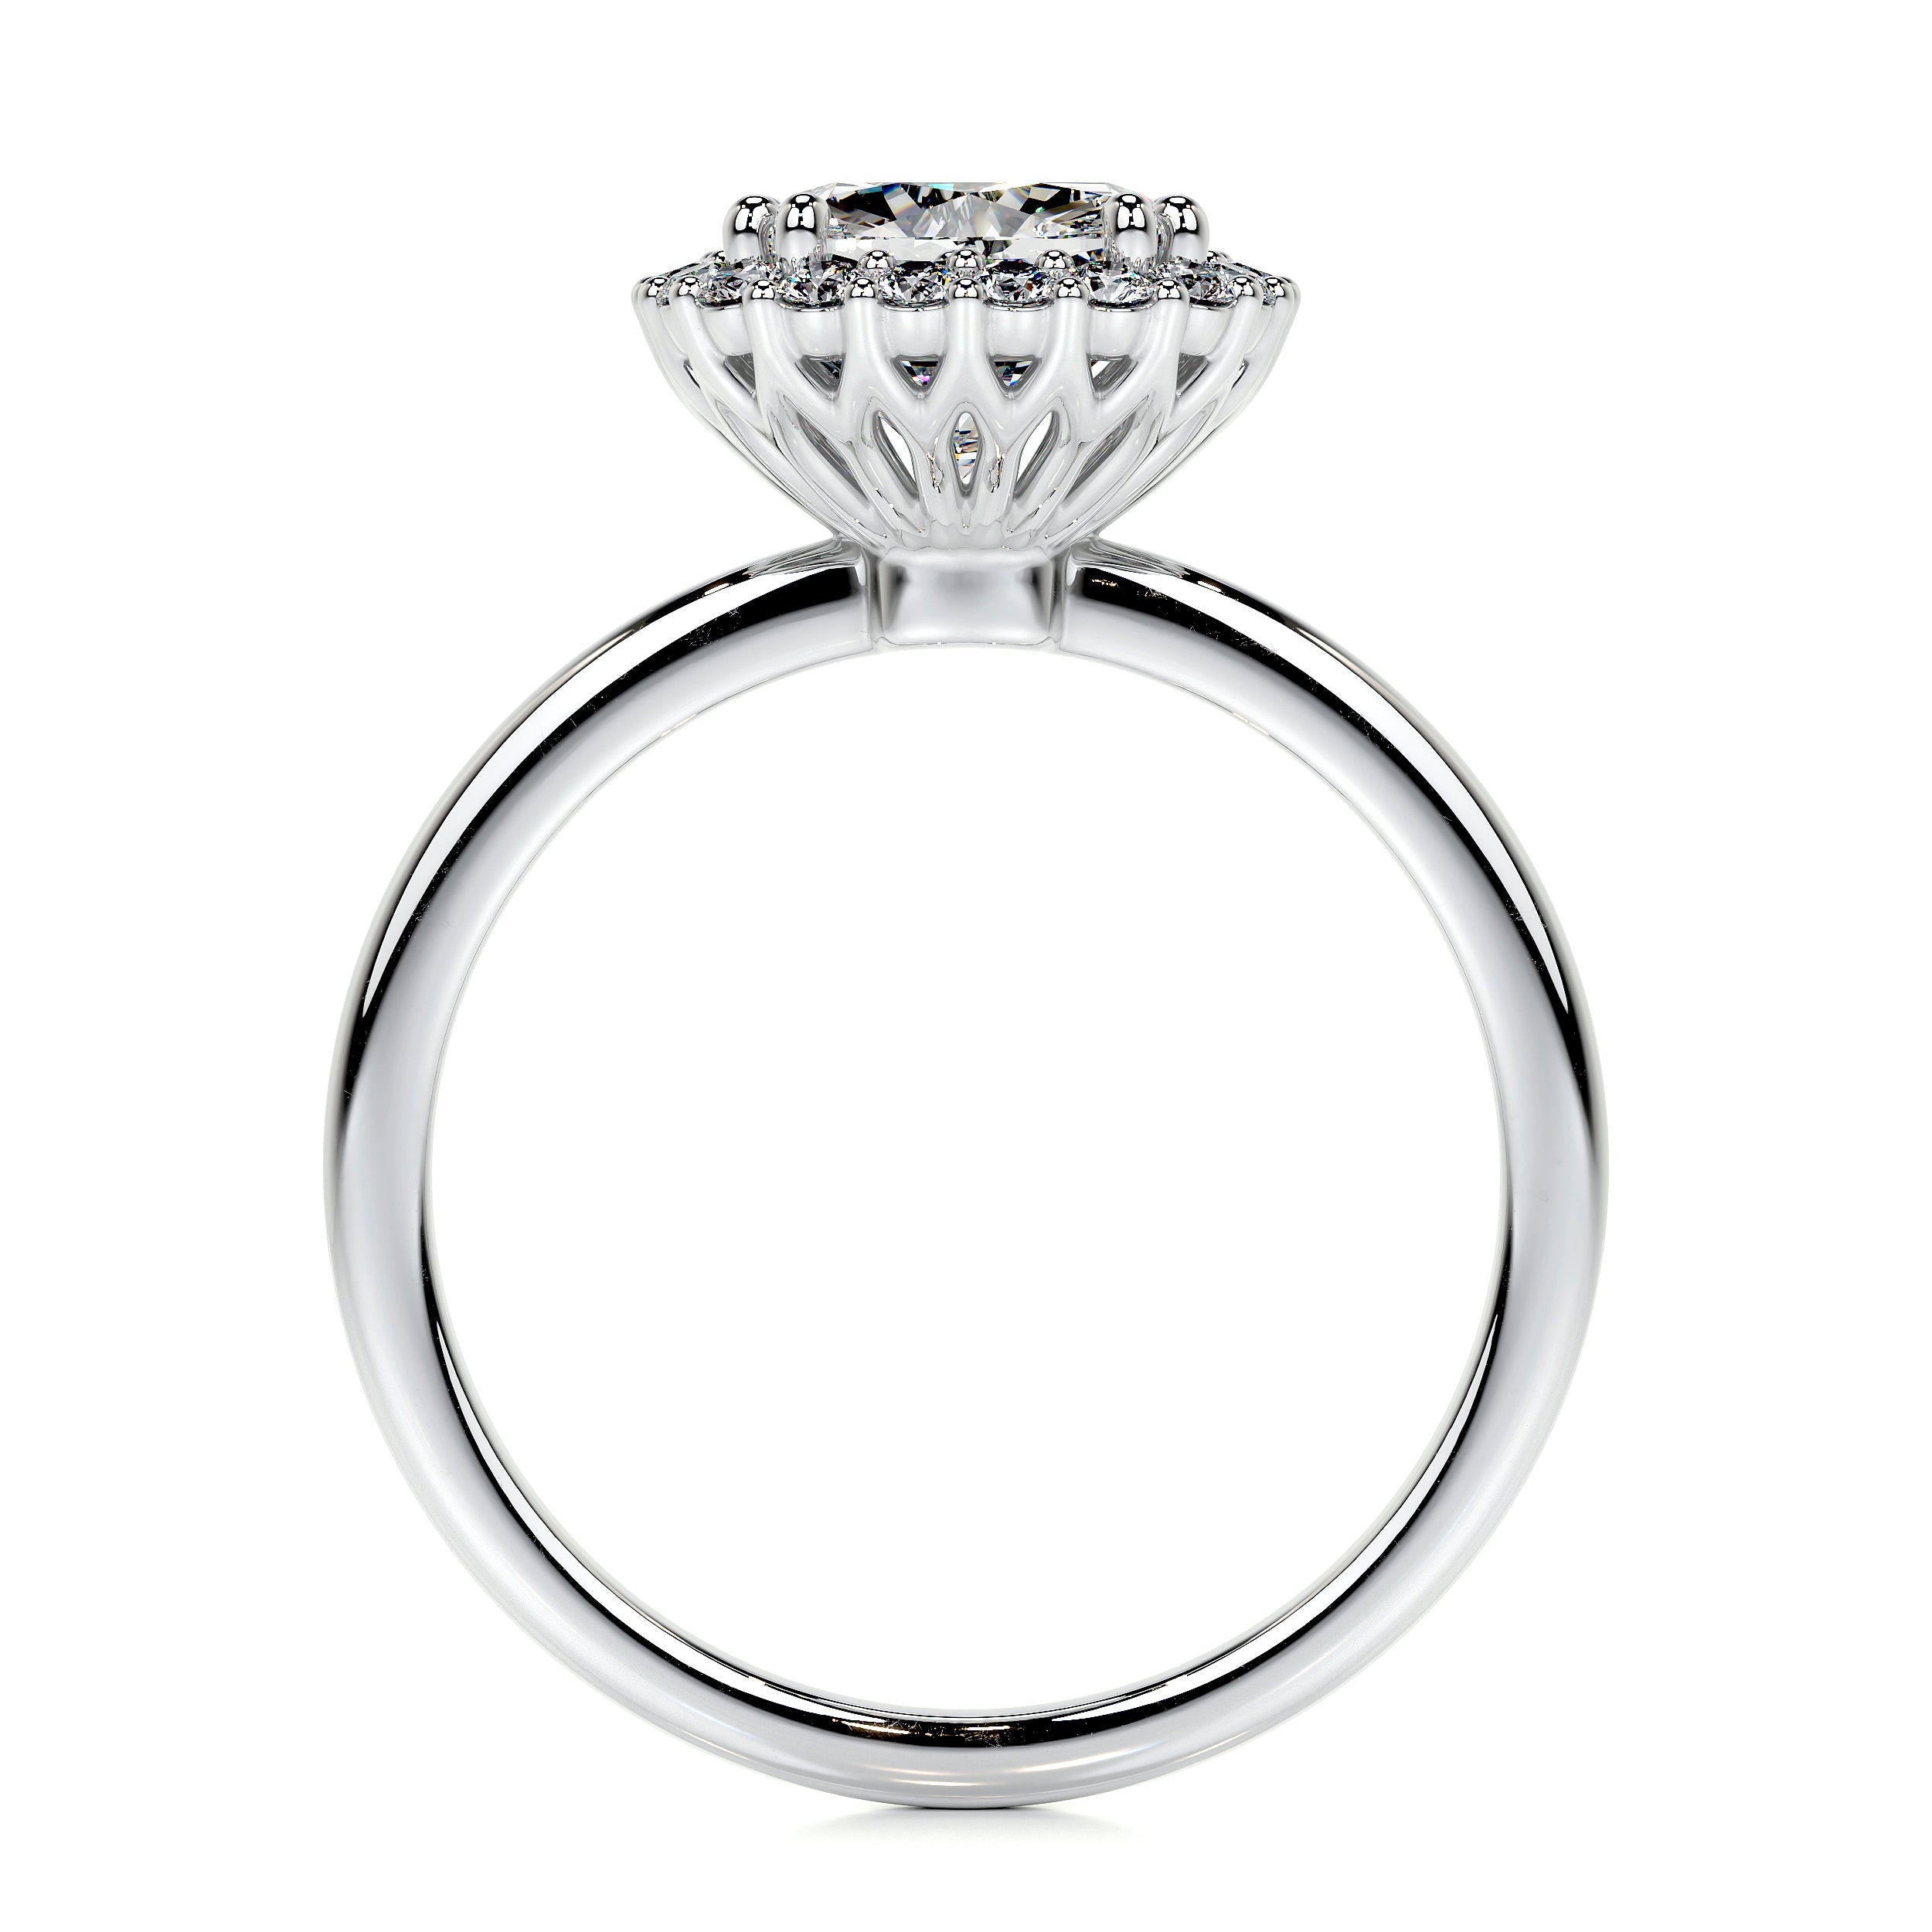 Bailey Lab Grown Diamond Ring   (2.25 Carat) -Platinum